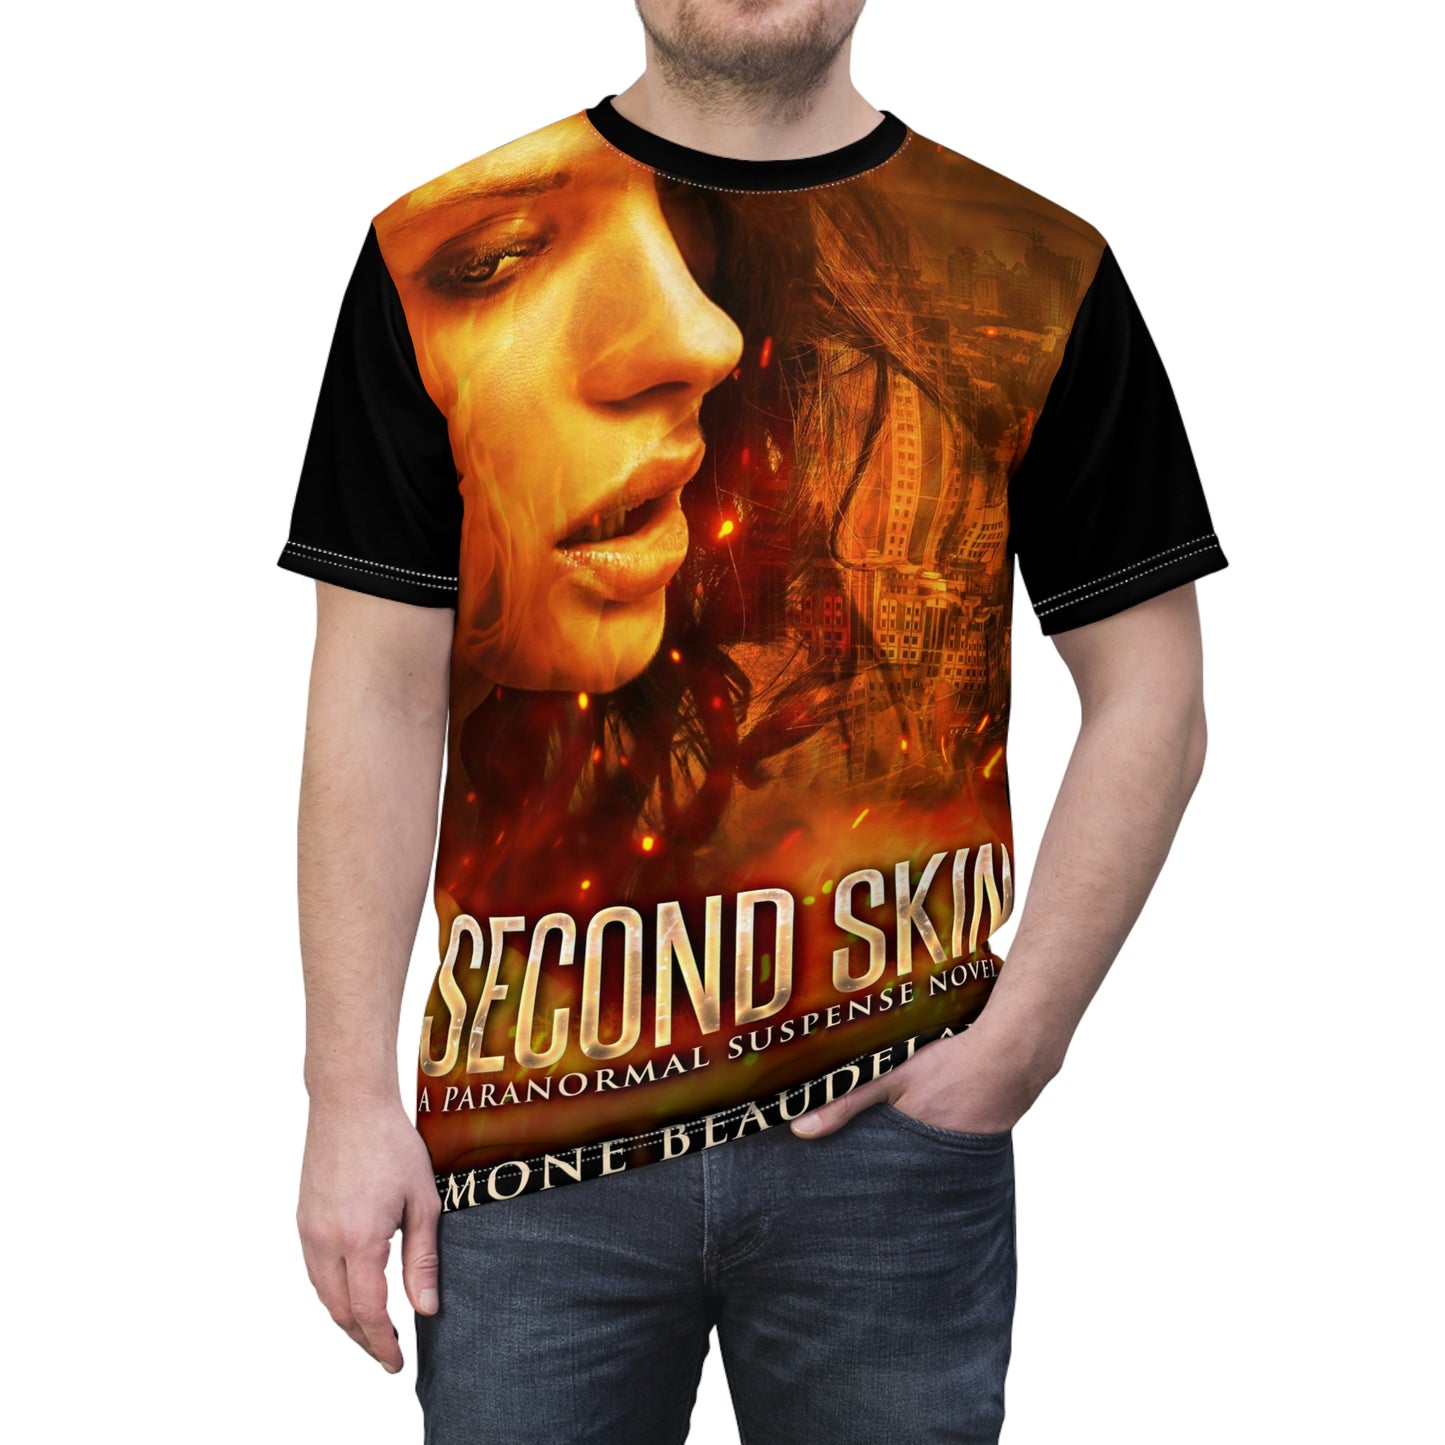 Second Skin - Unisex All-Over Print Cut & Sew T-Shirt